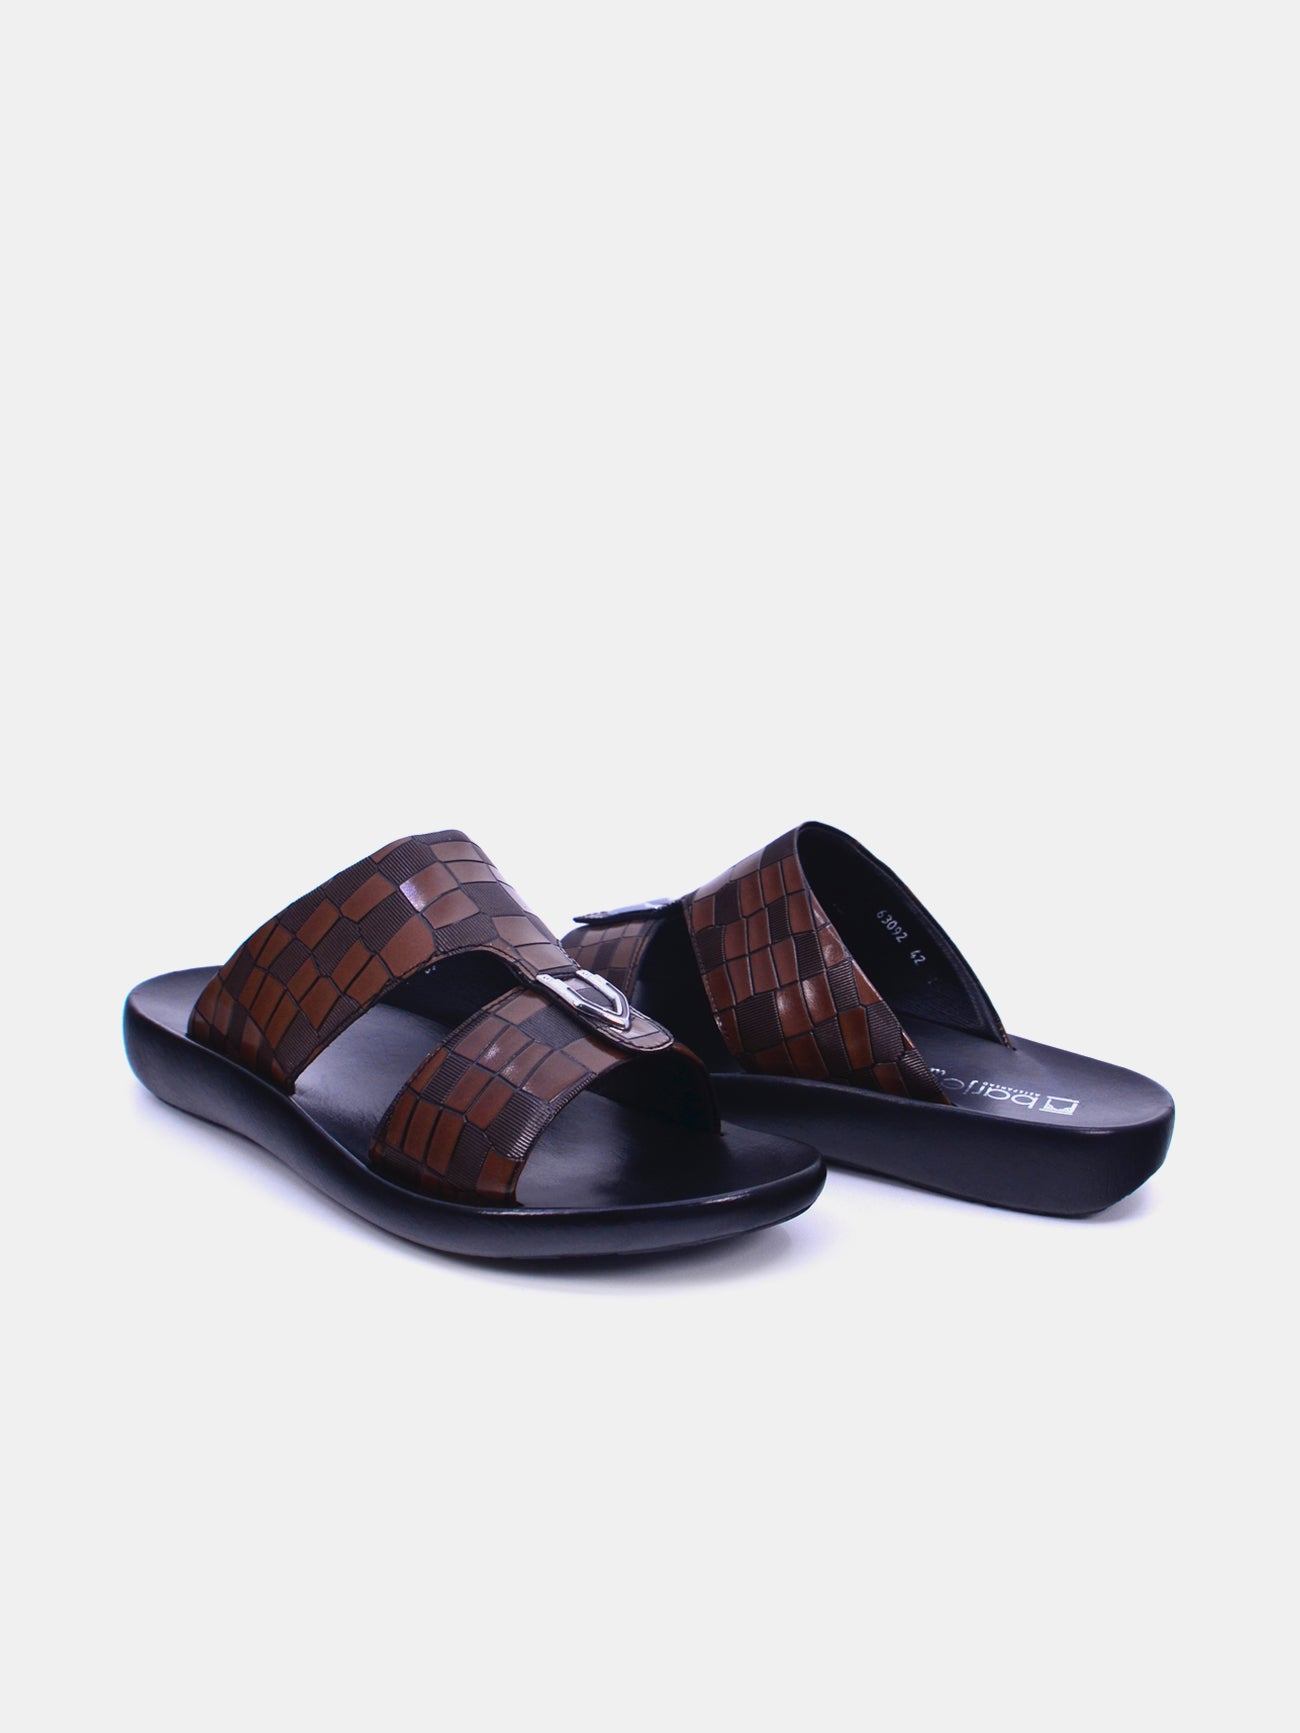 Barjeel Uno 63092 Men's Sandals #color_Brown